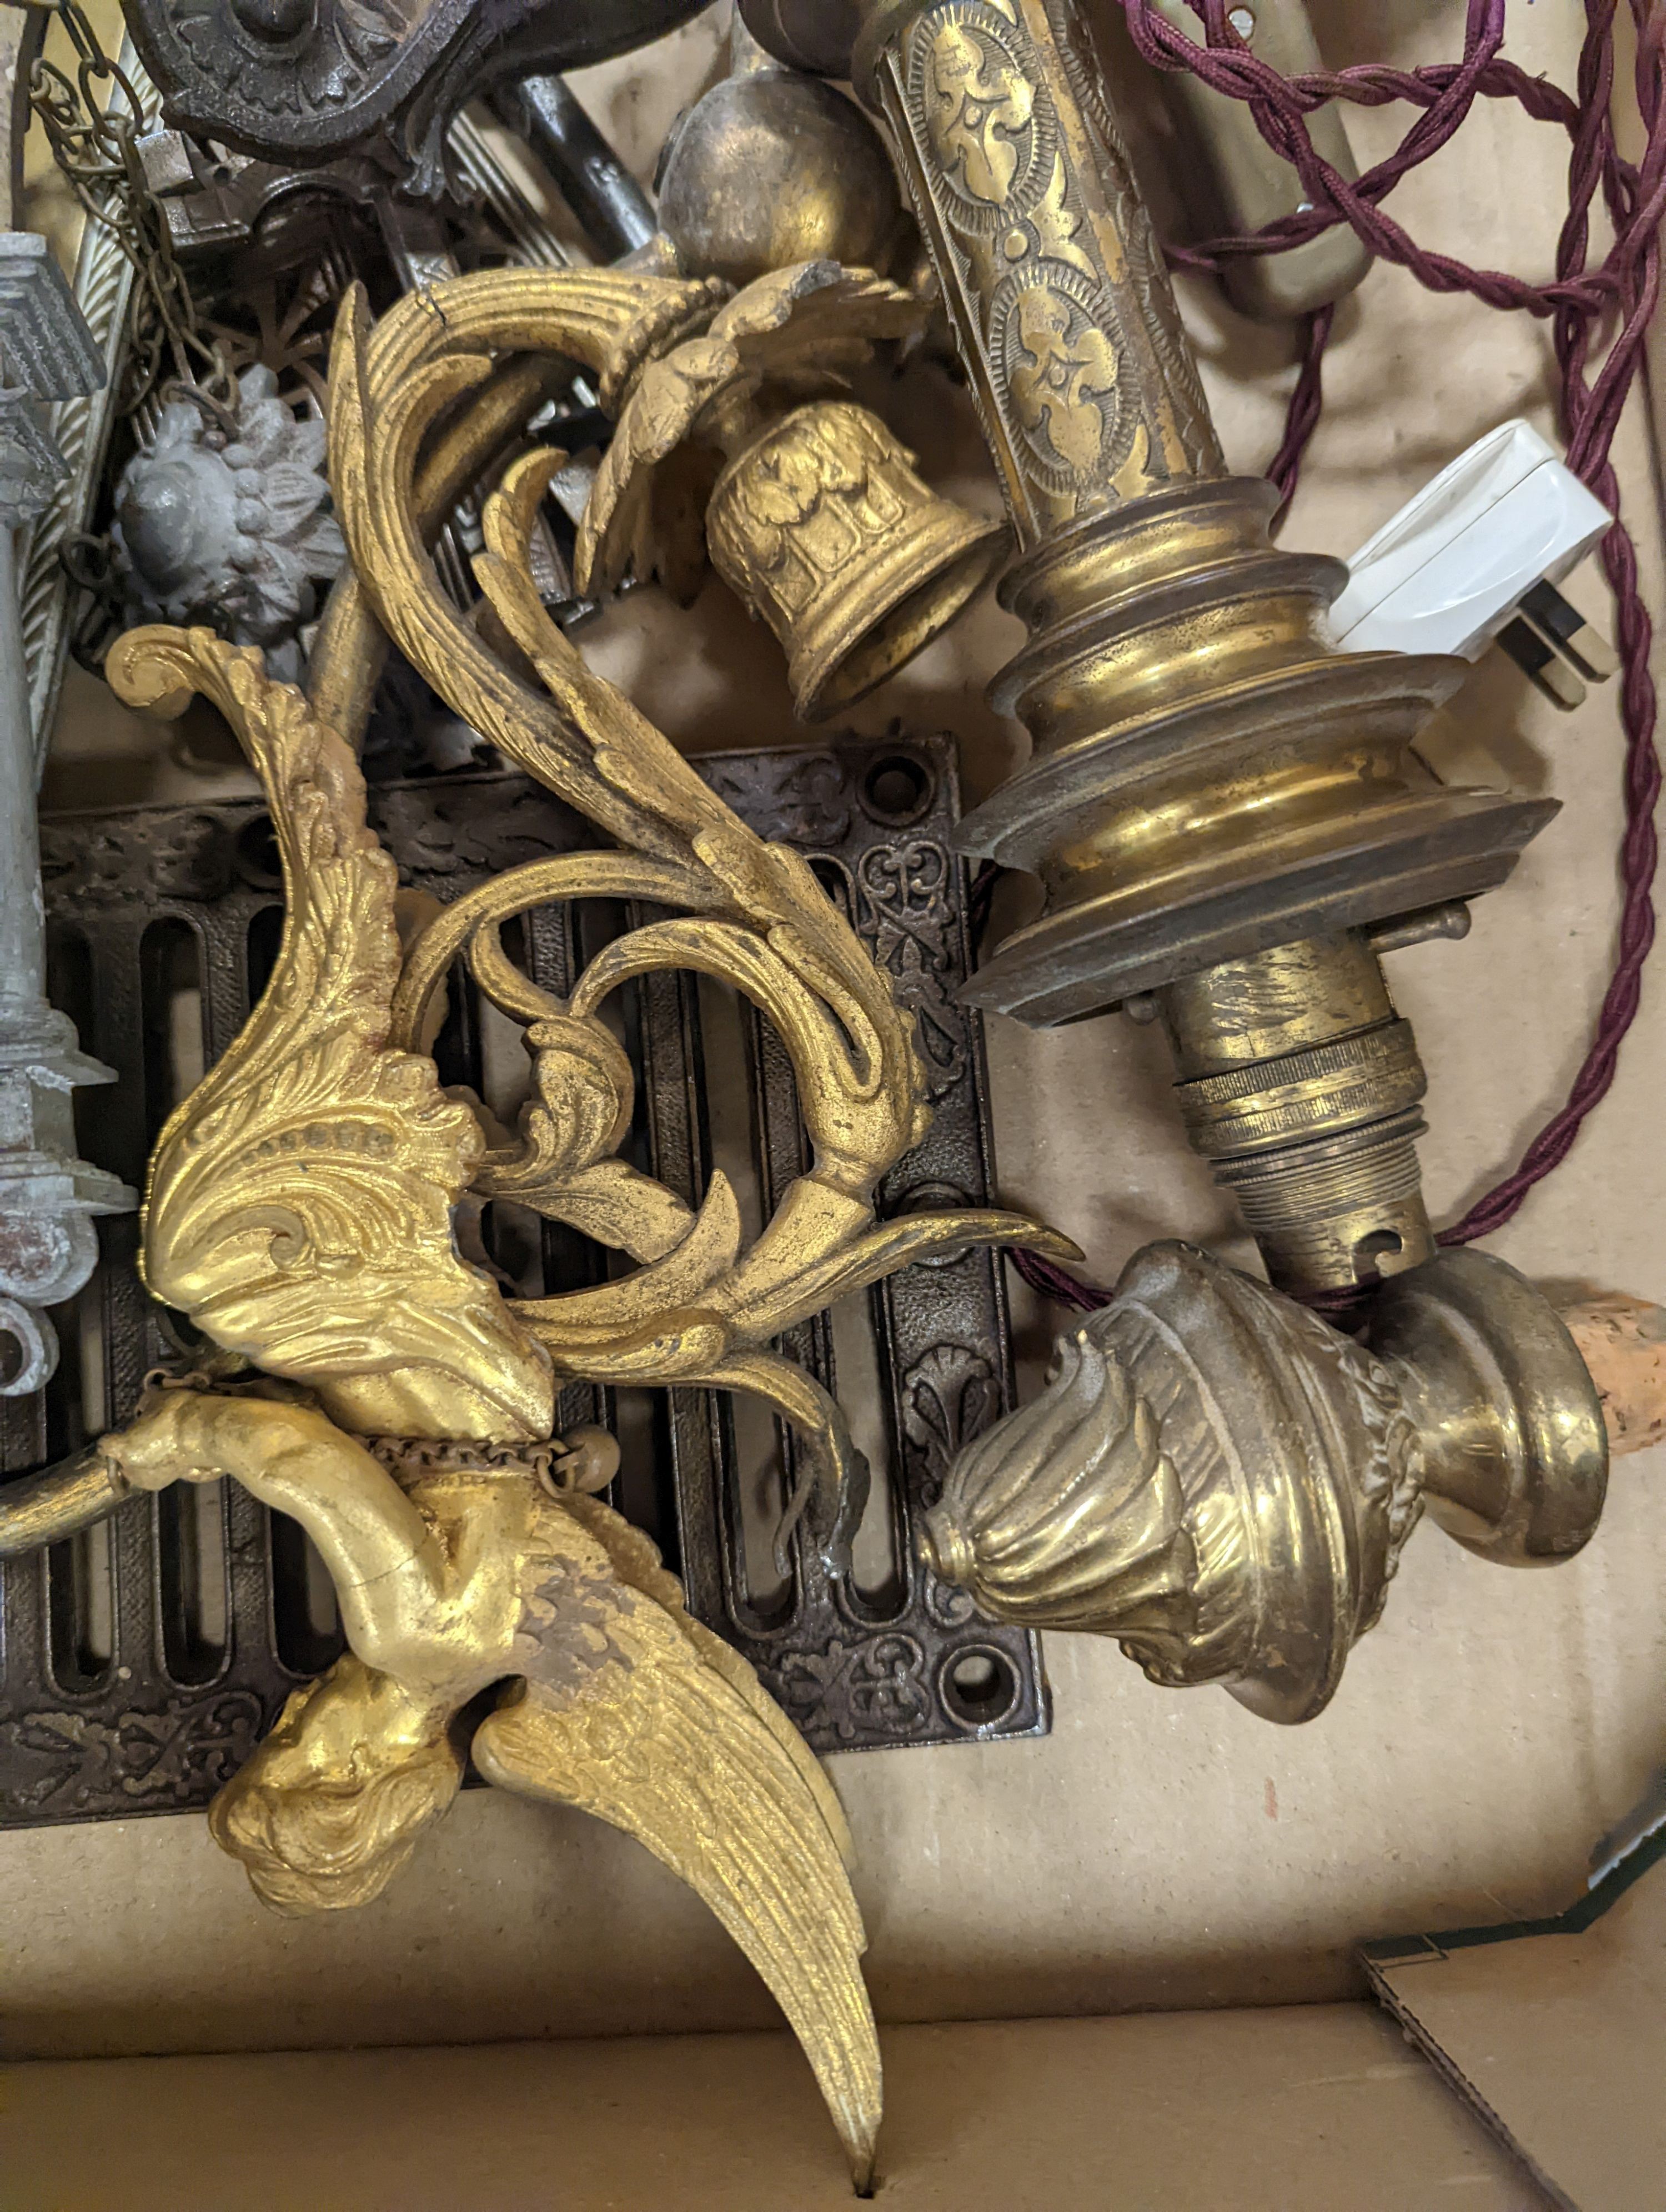 A brass oil lamp, a brass figure of an angel and mixed metalwares.